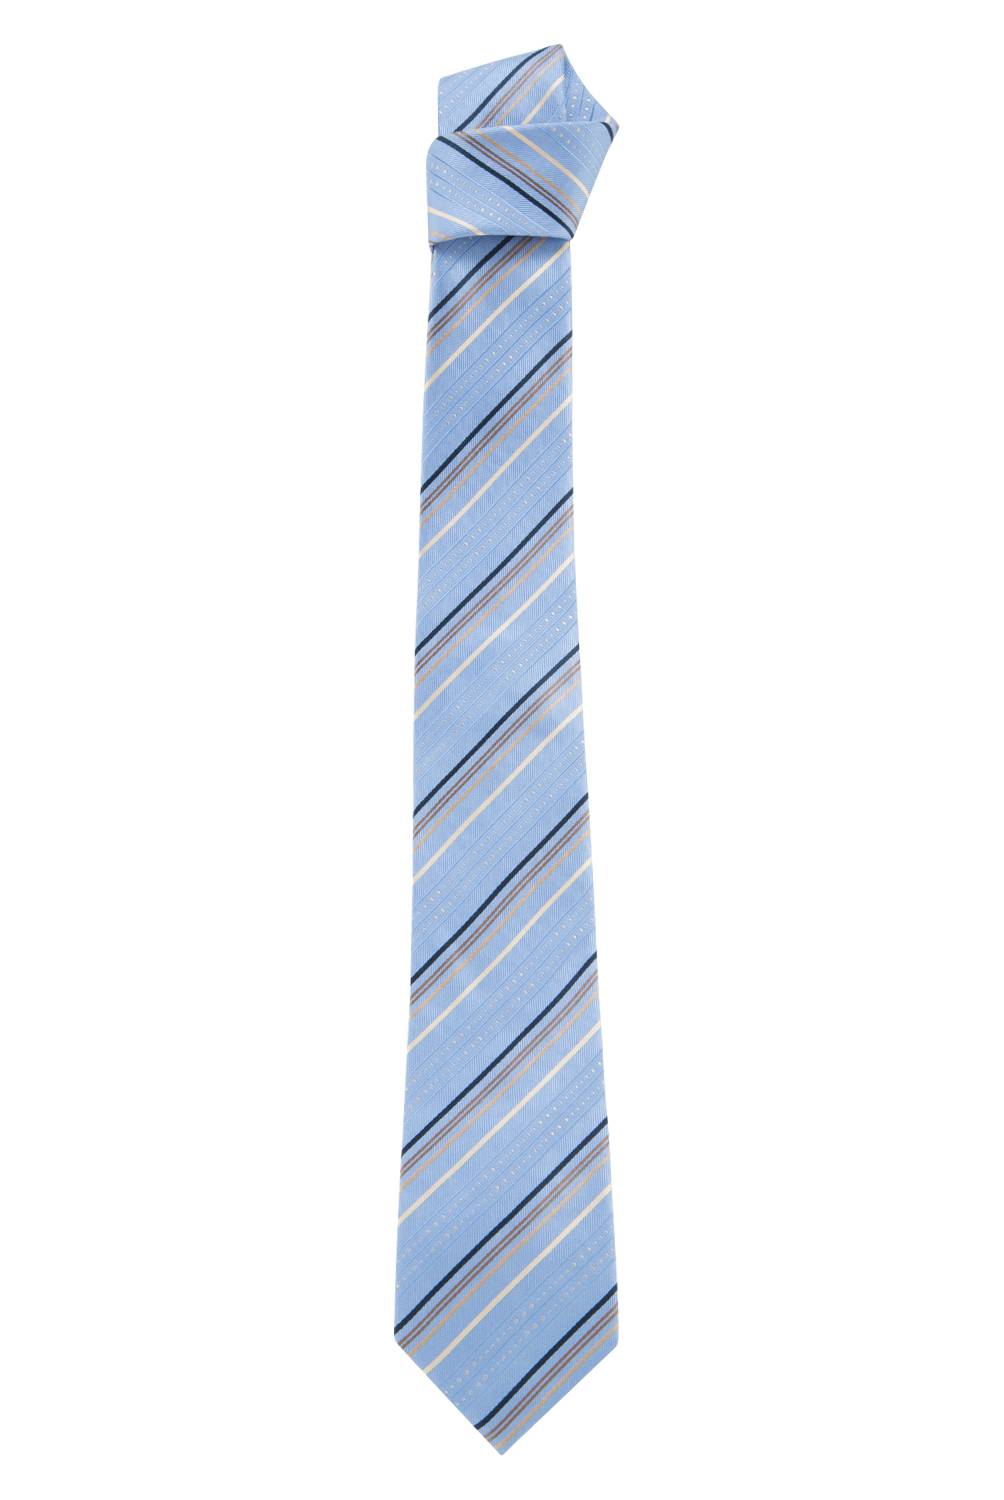 CHRISTIAN LACROIX - Corbata Seda Rayas 7,5 cm